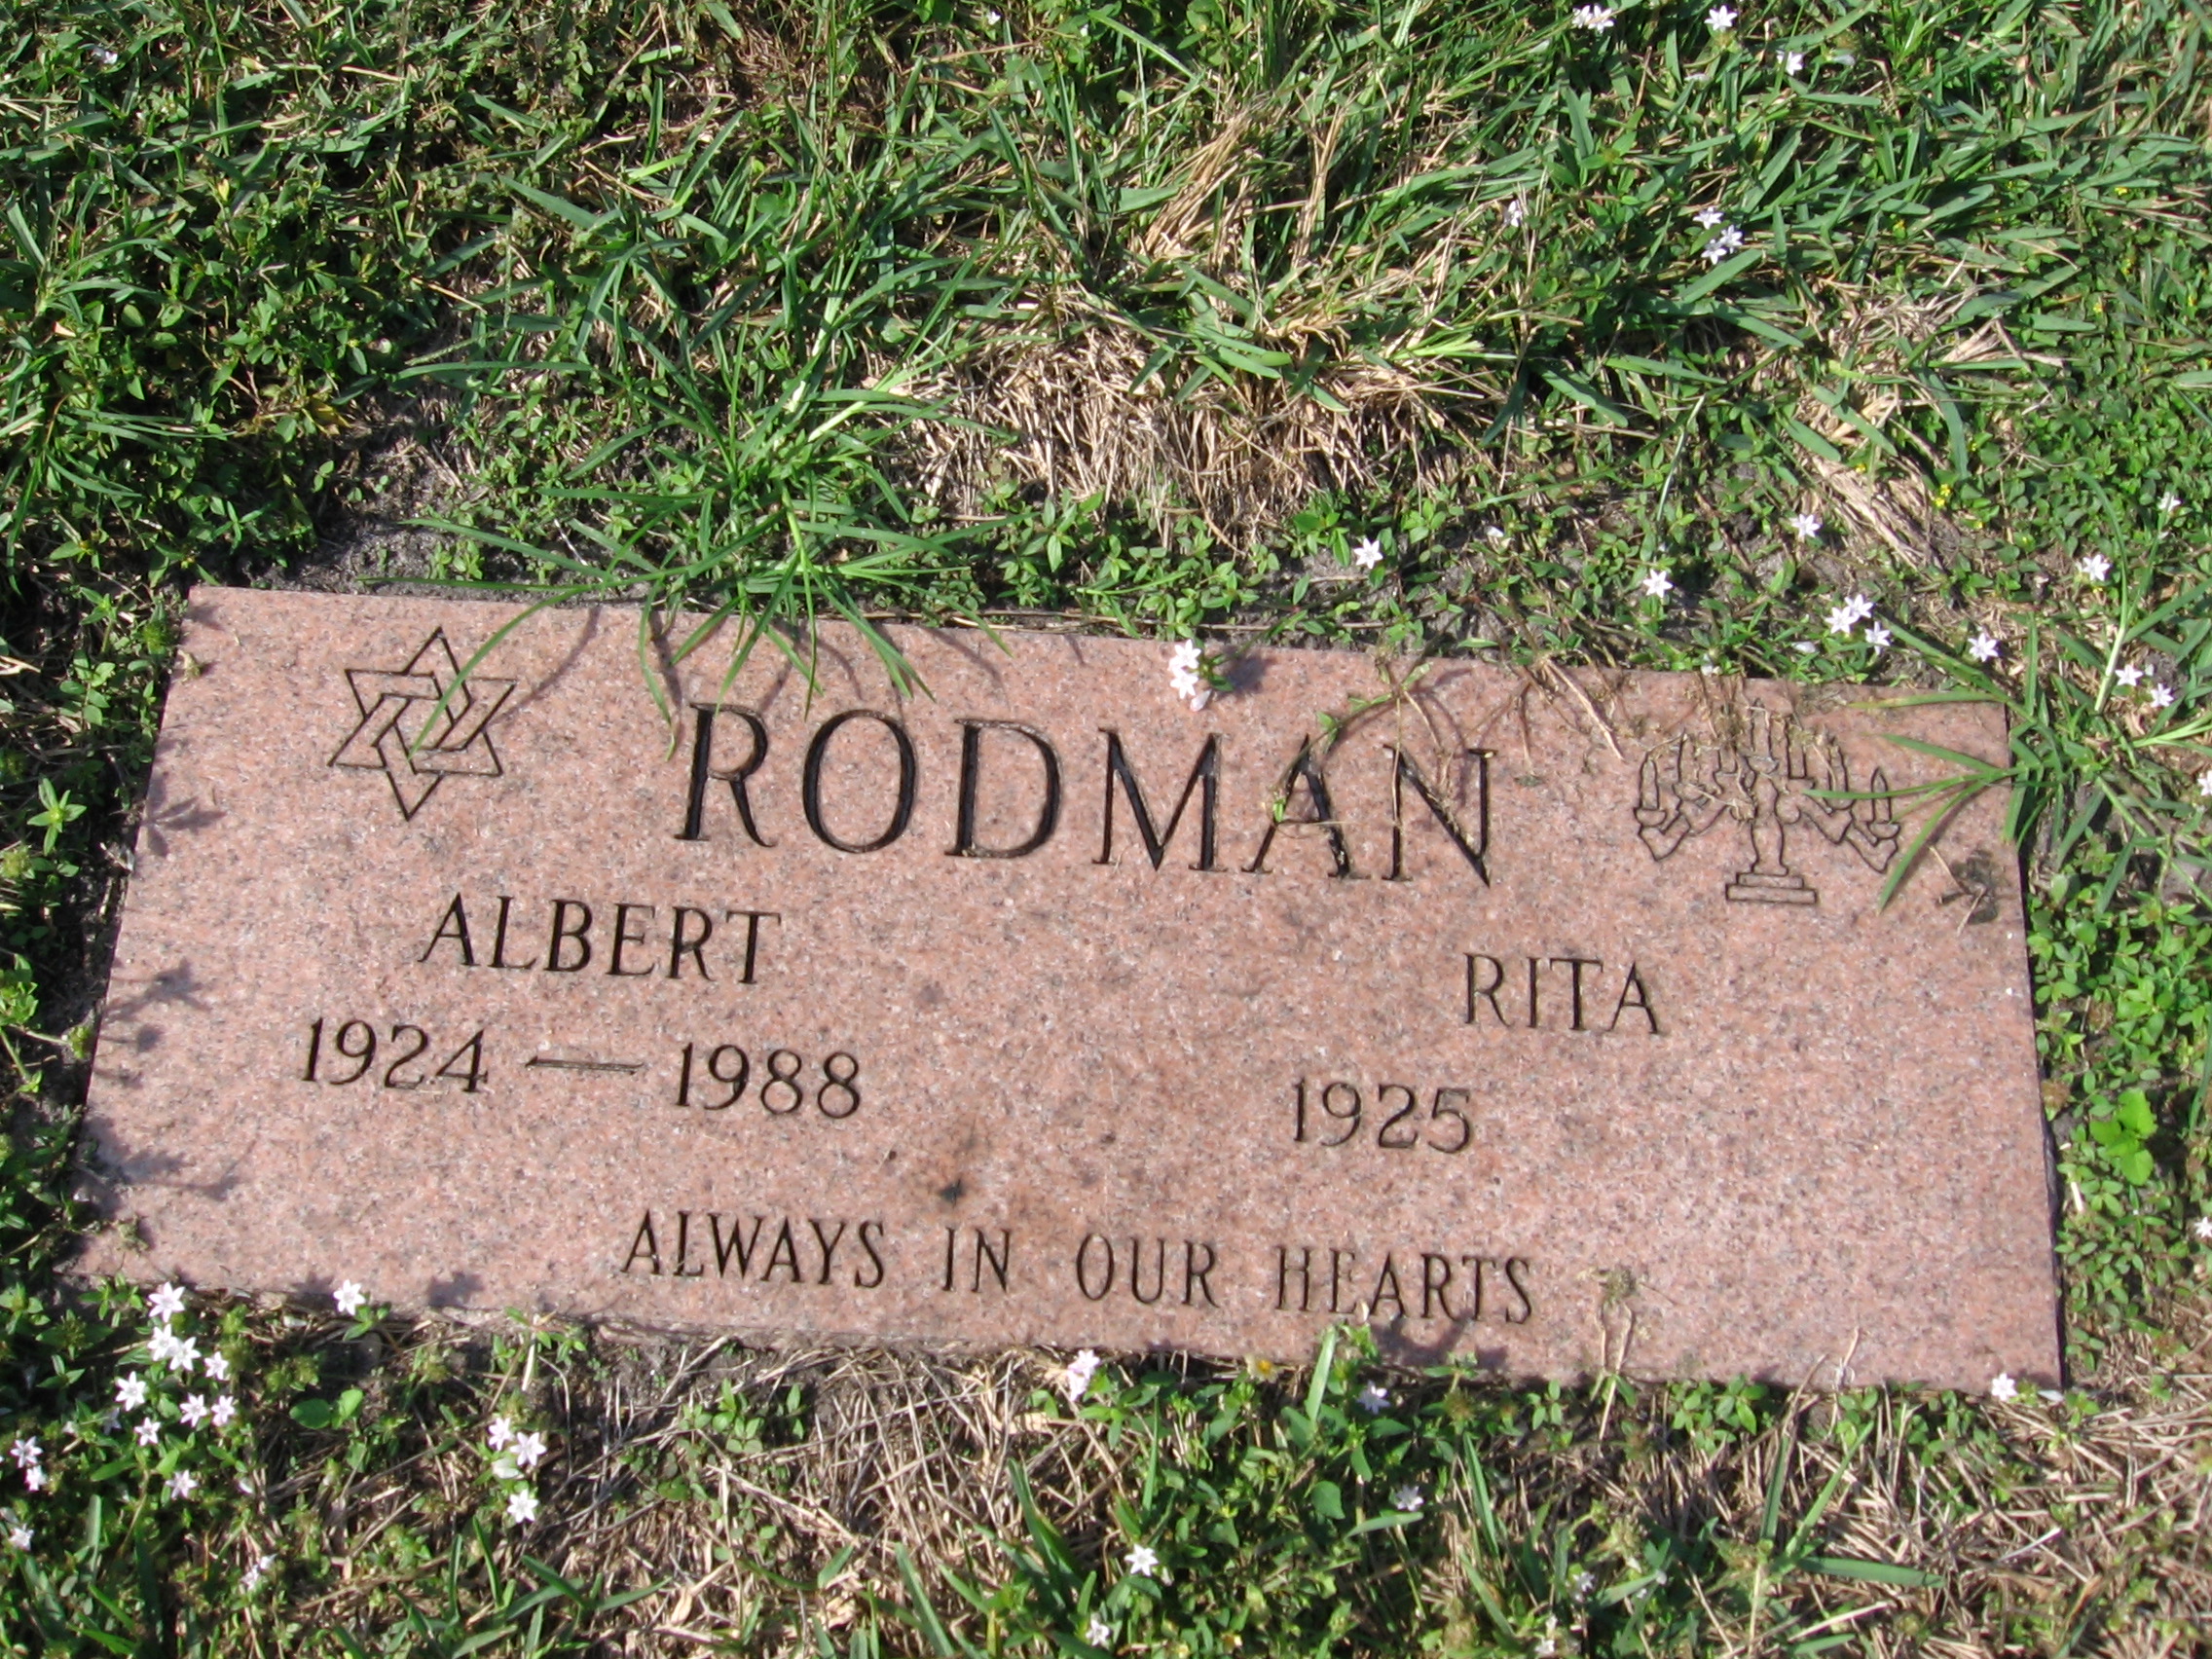 Albert Rodman